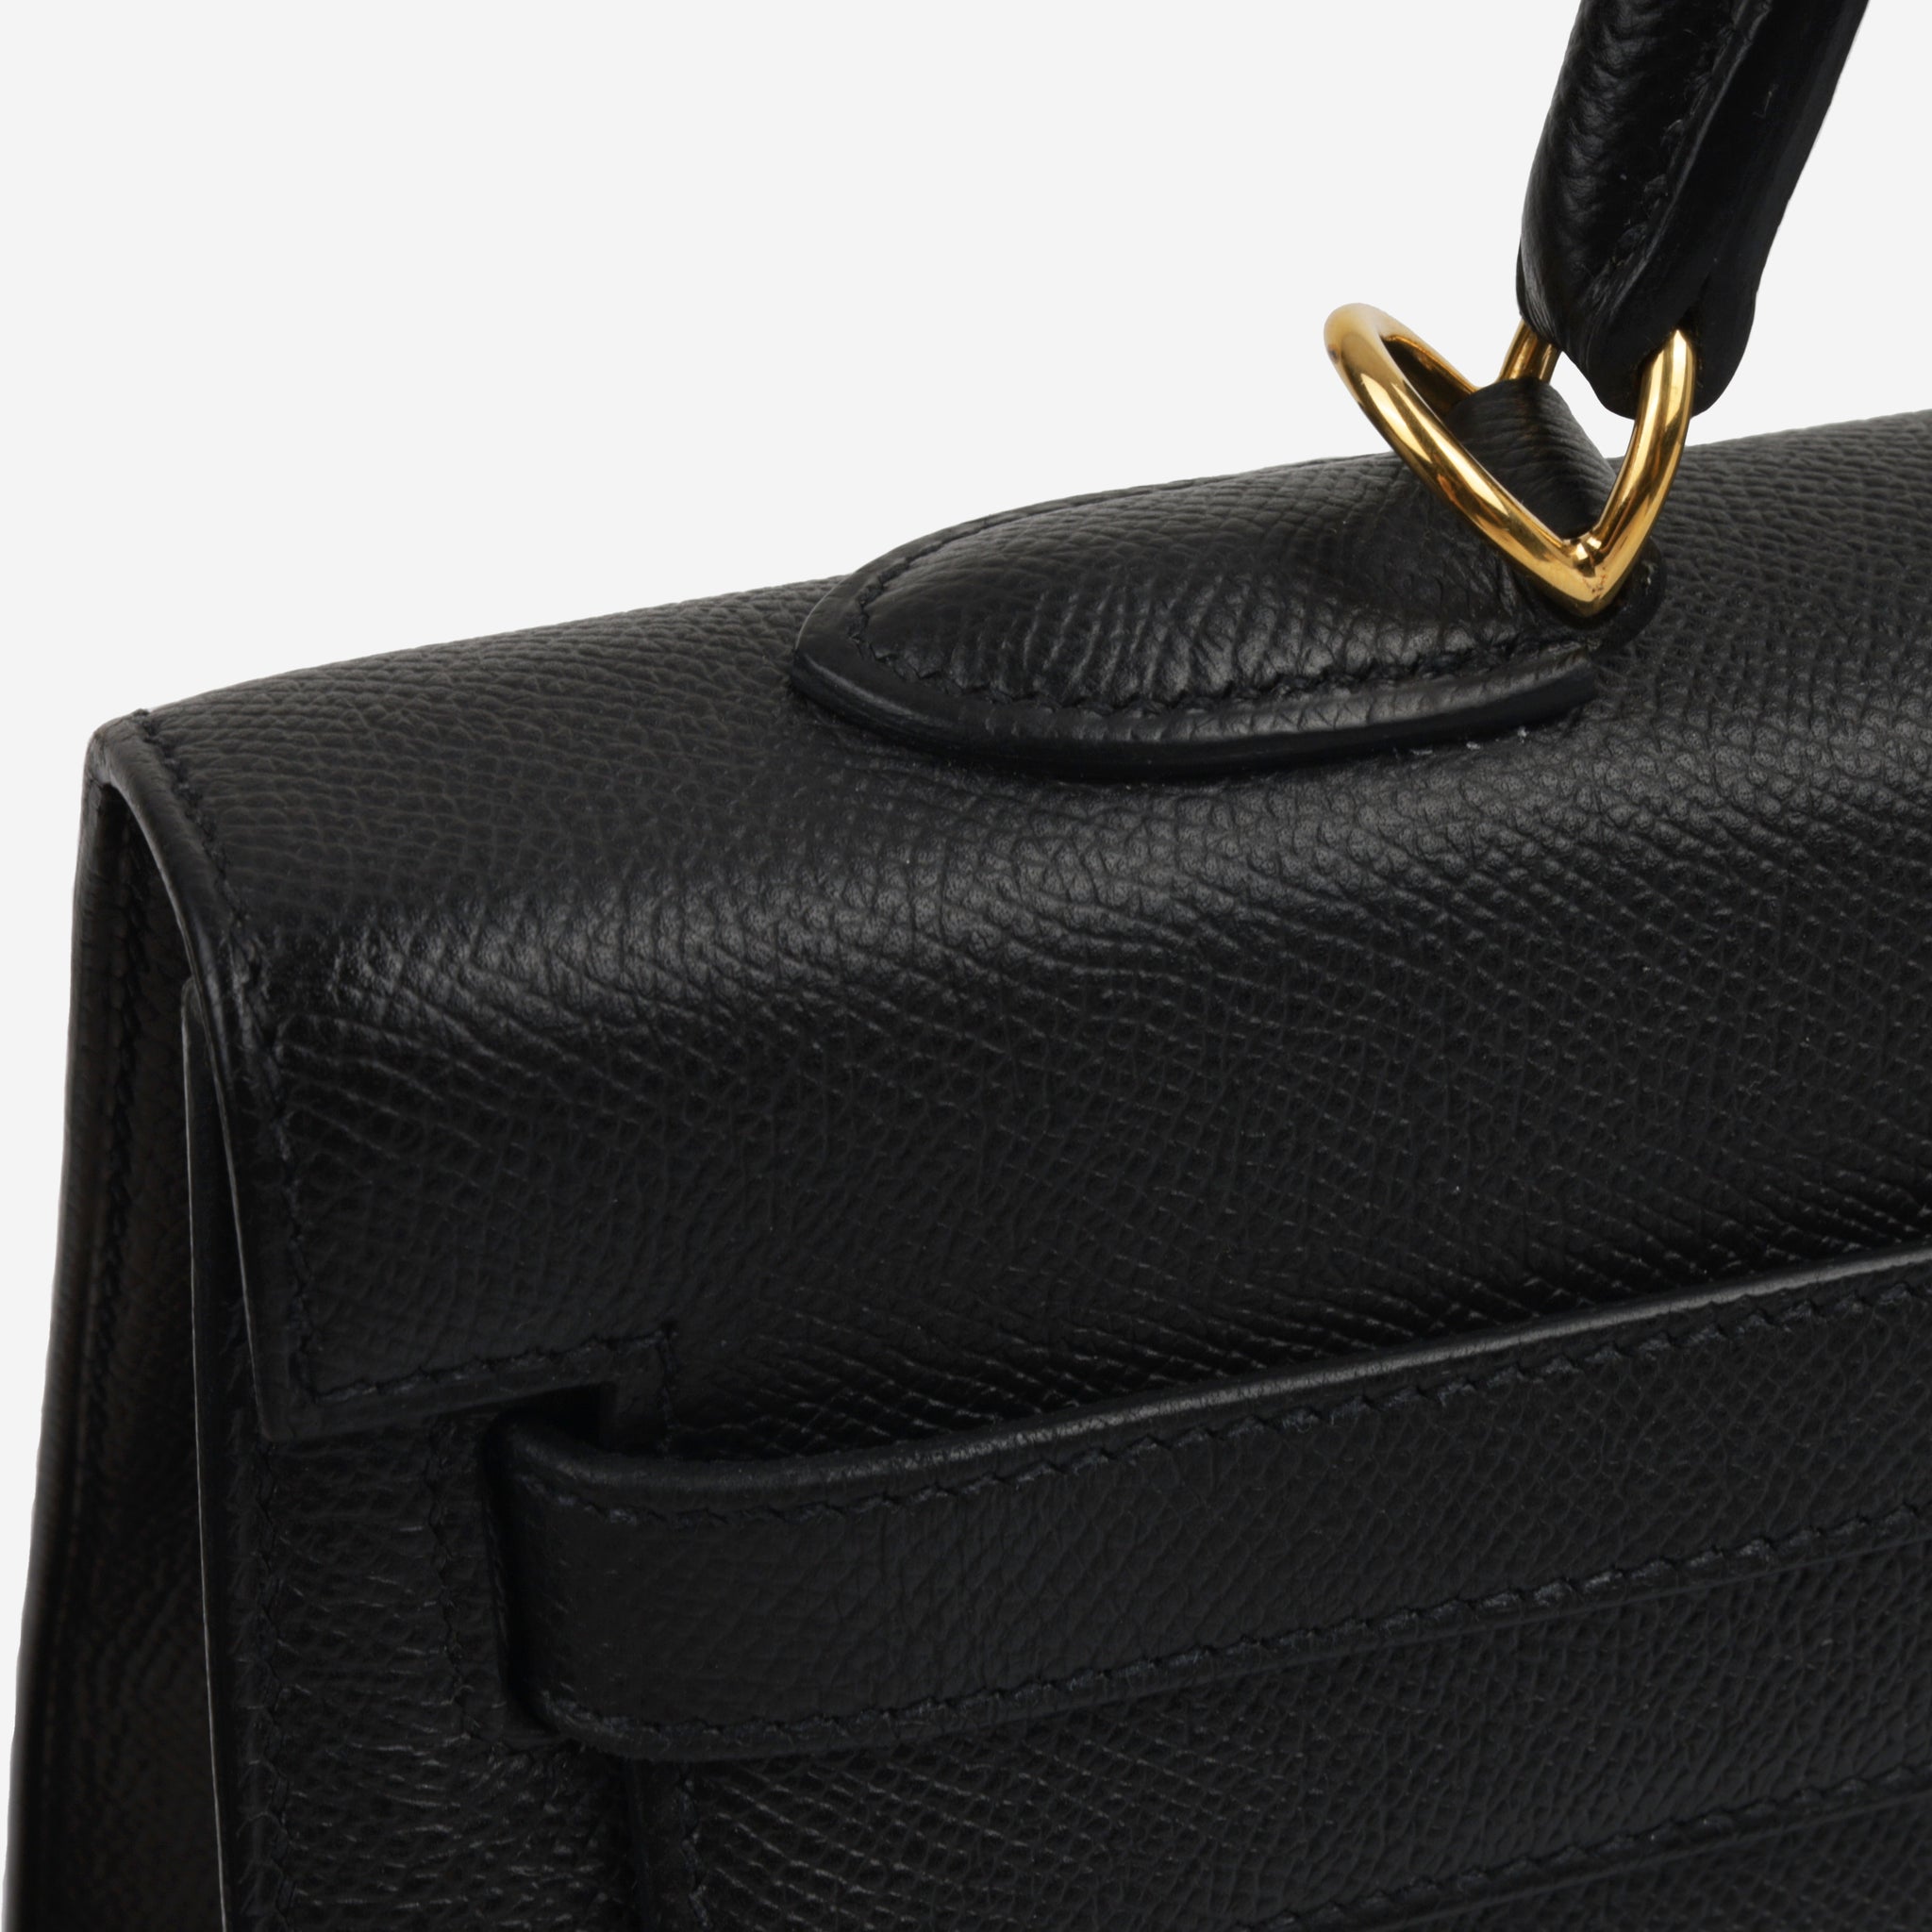 Hermès - Kelly 35 - Noir Epsom - GHW - Pre-Loved 2015